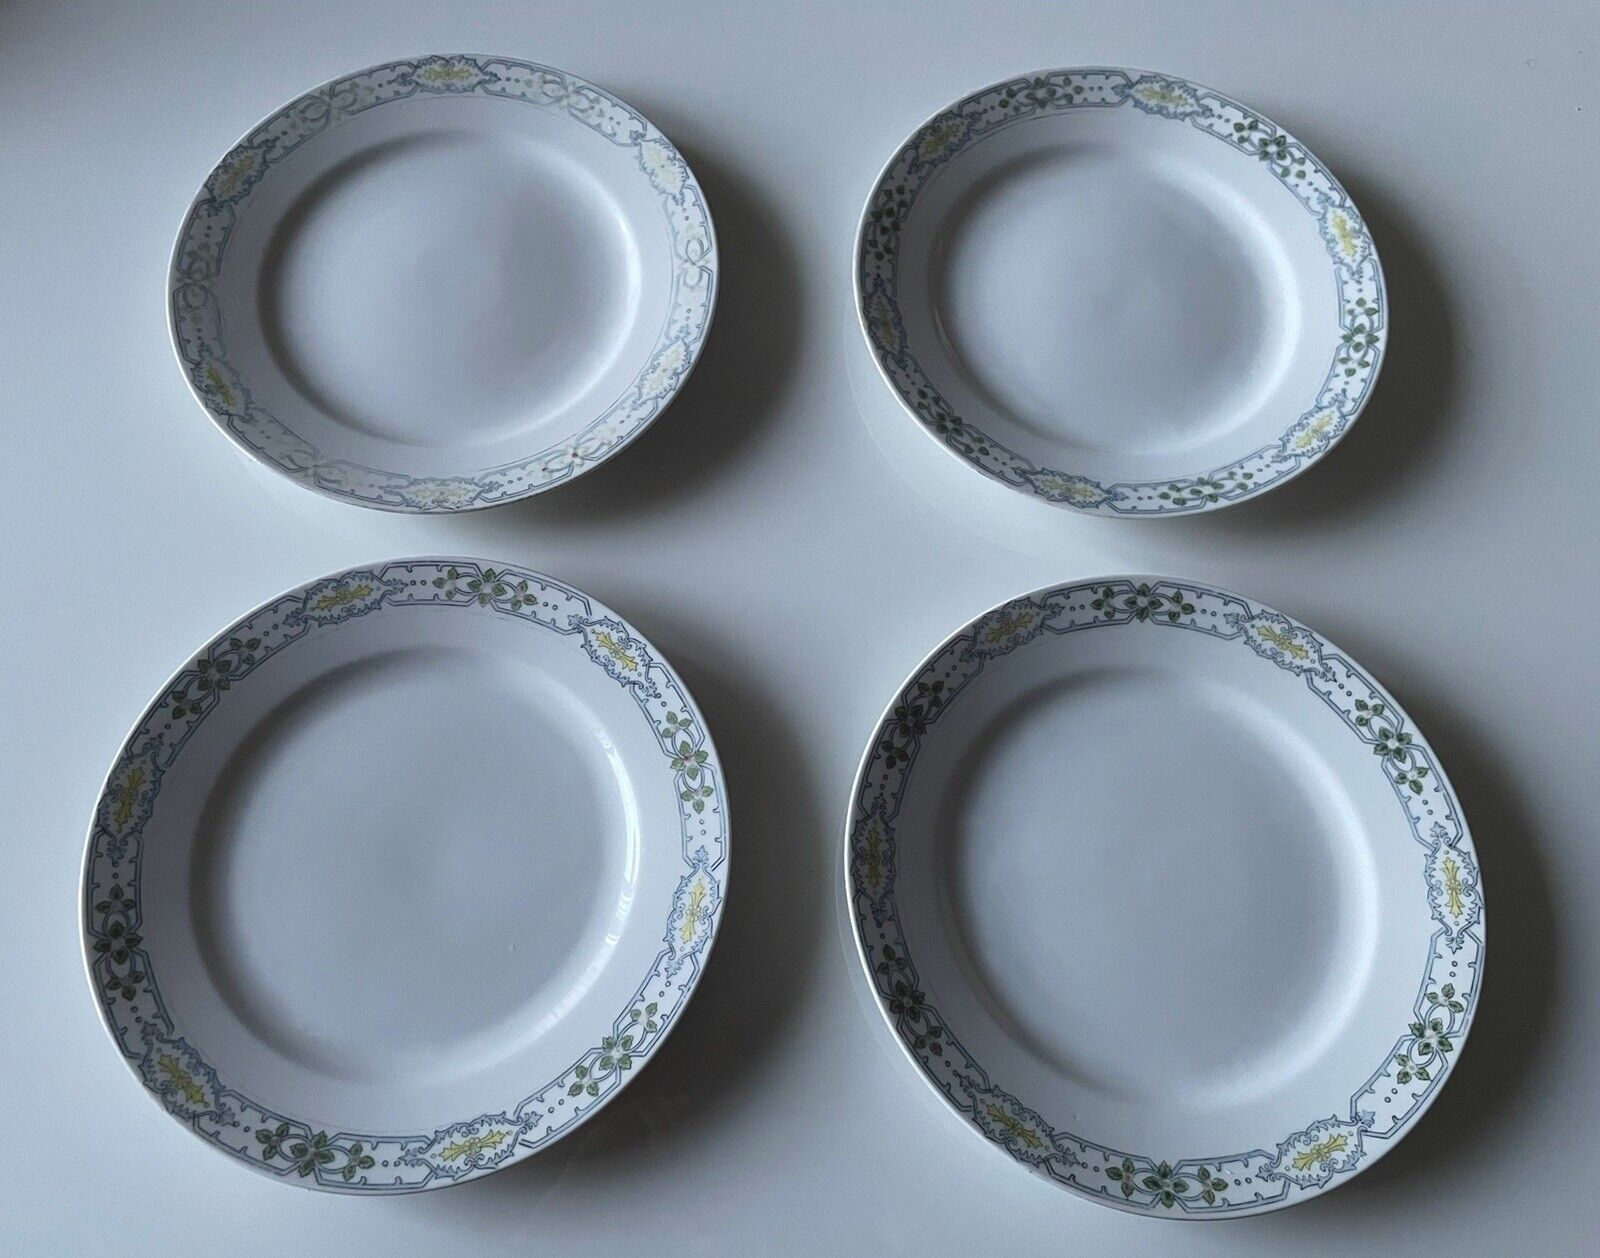 NORITAKE CHINA N1944 DINNER PLATES SET OF 4 RARE DISCONTINUED PATTERN